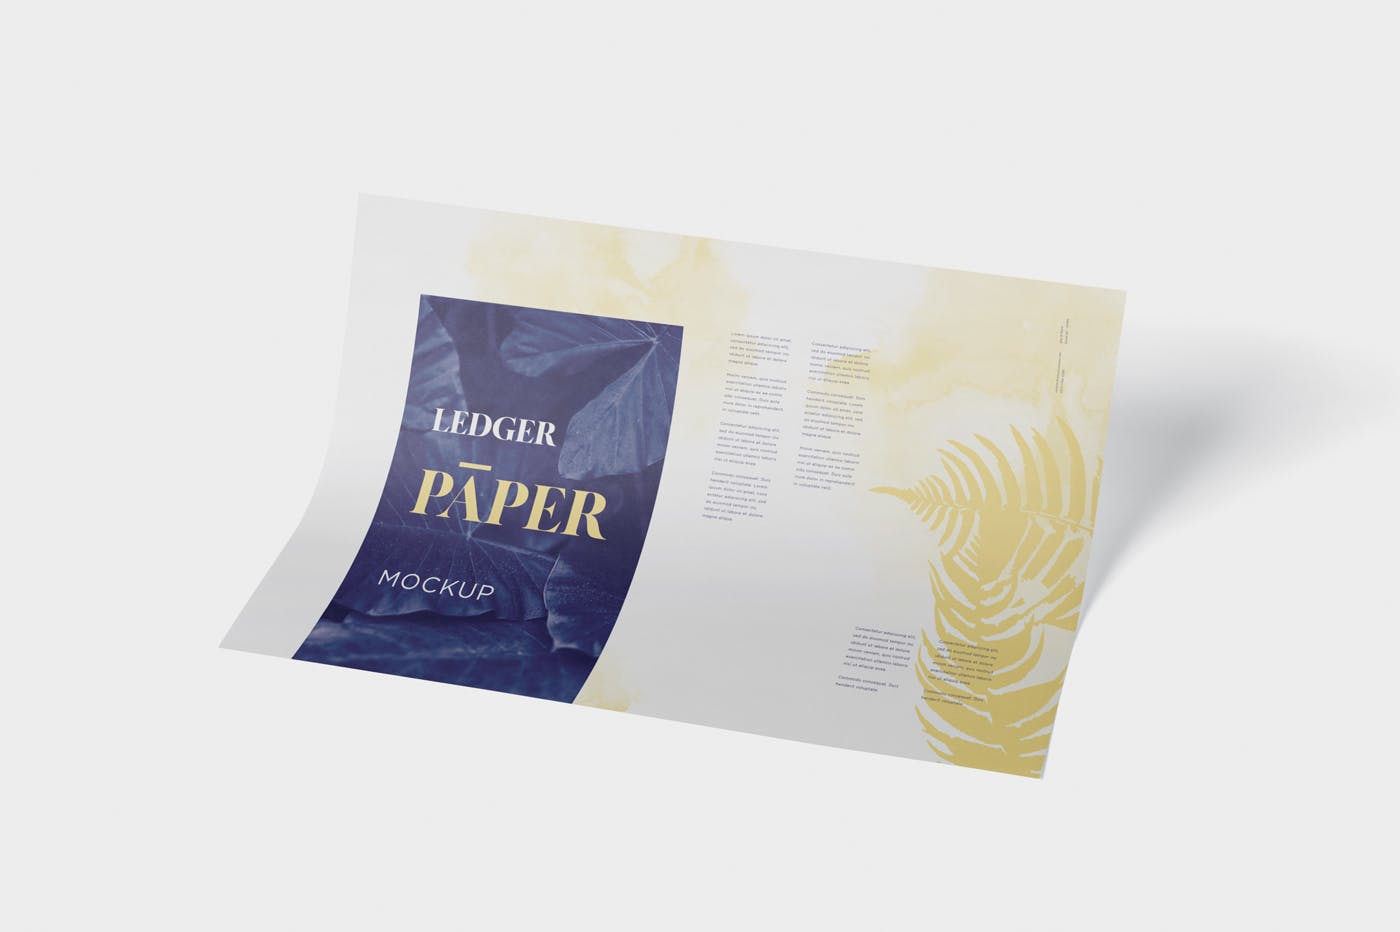 印刷品设计效果图样机第一素材精选模板 Ledger Paper Mockup – 17×11 Inch Size插图(4)